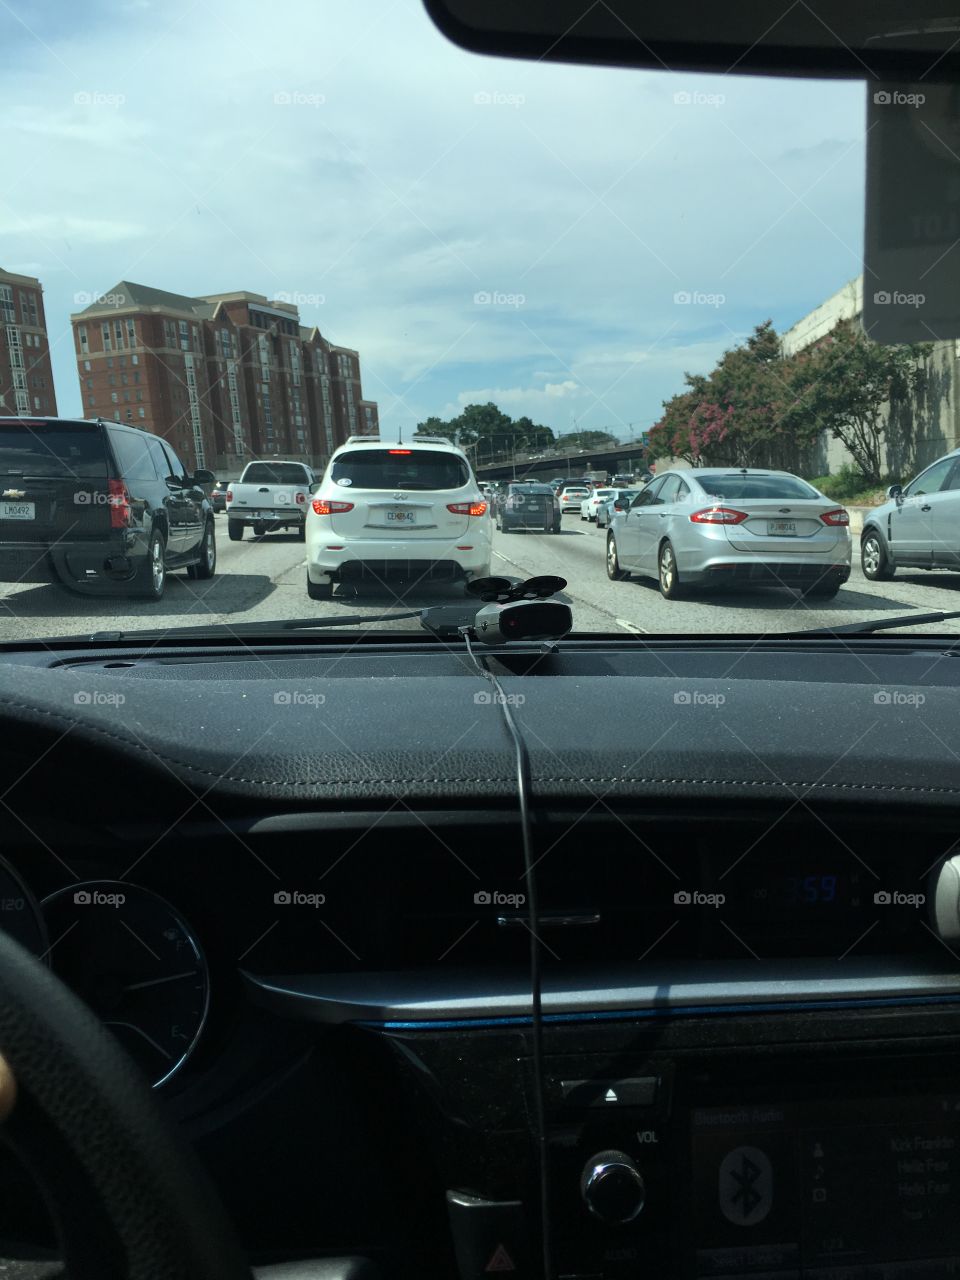 Atlanta traffic